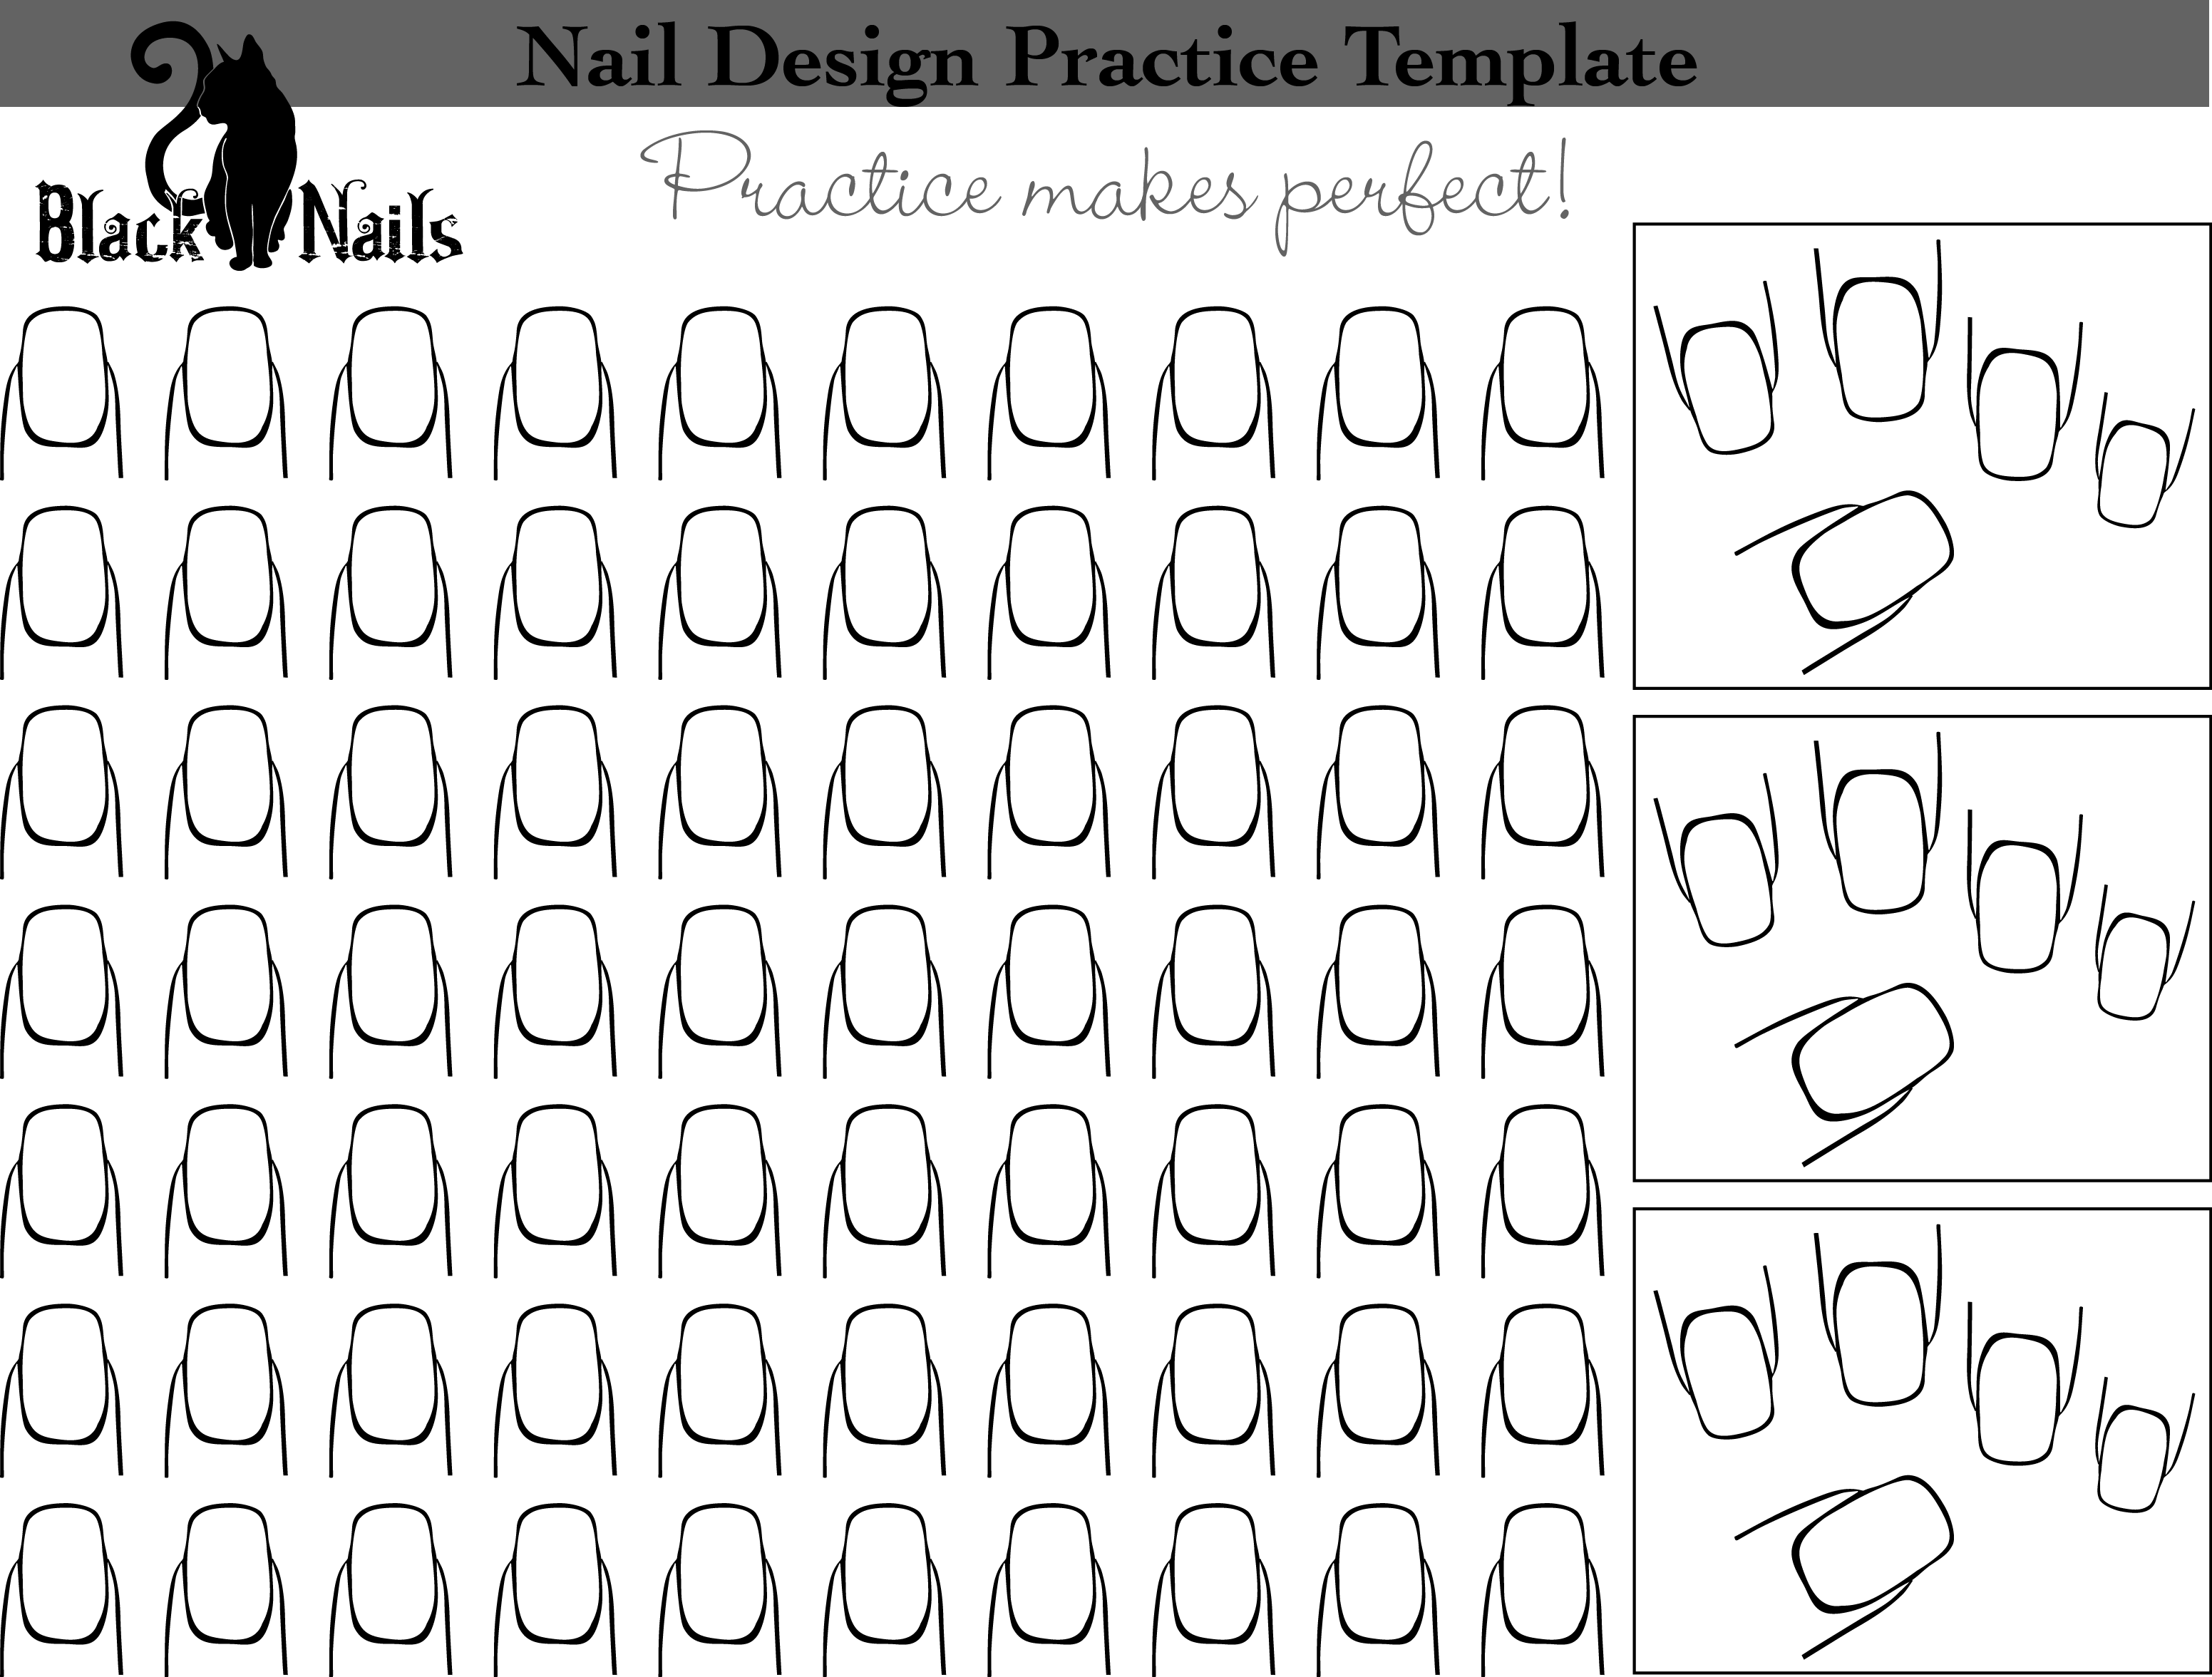 Nail Art Design Practice SheetNail Art Design Practice Sheet 